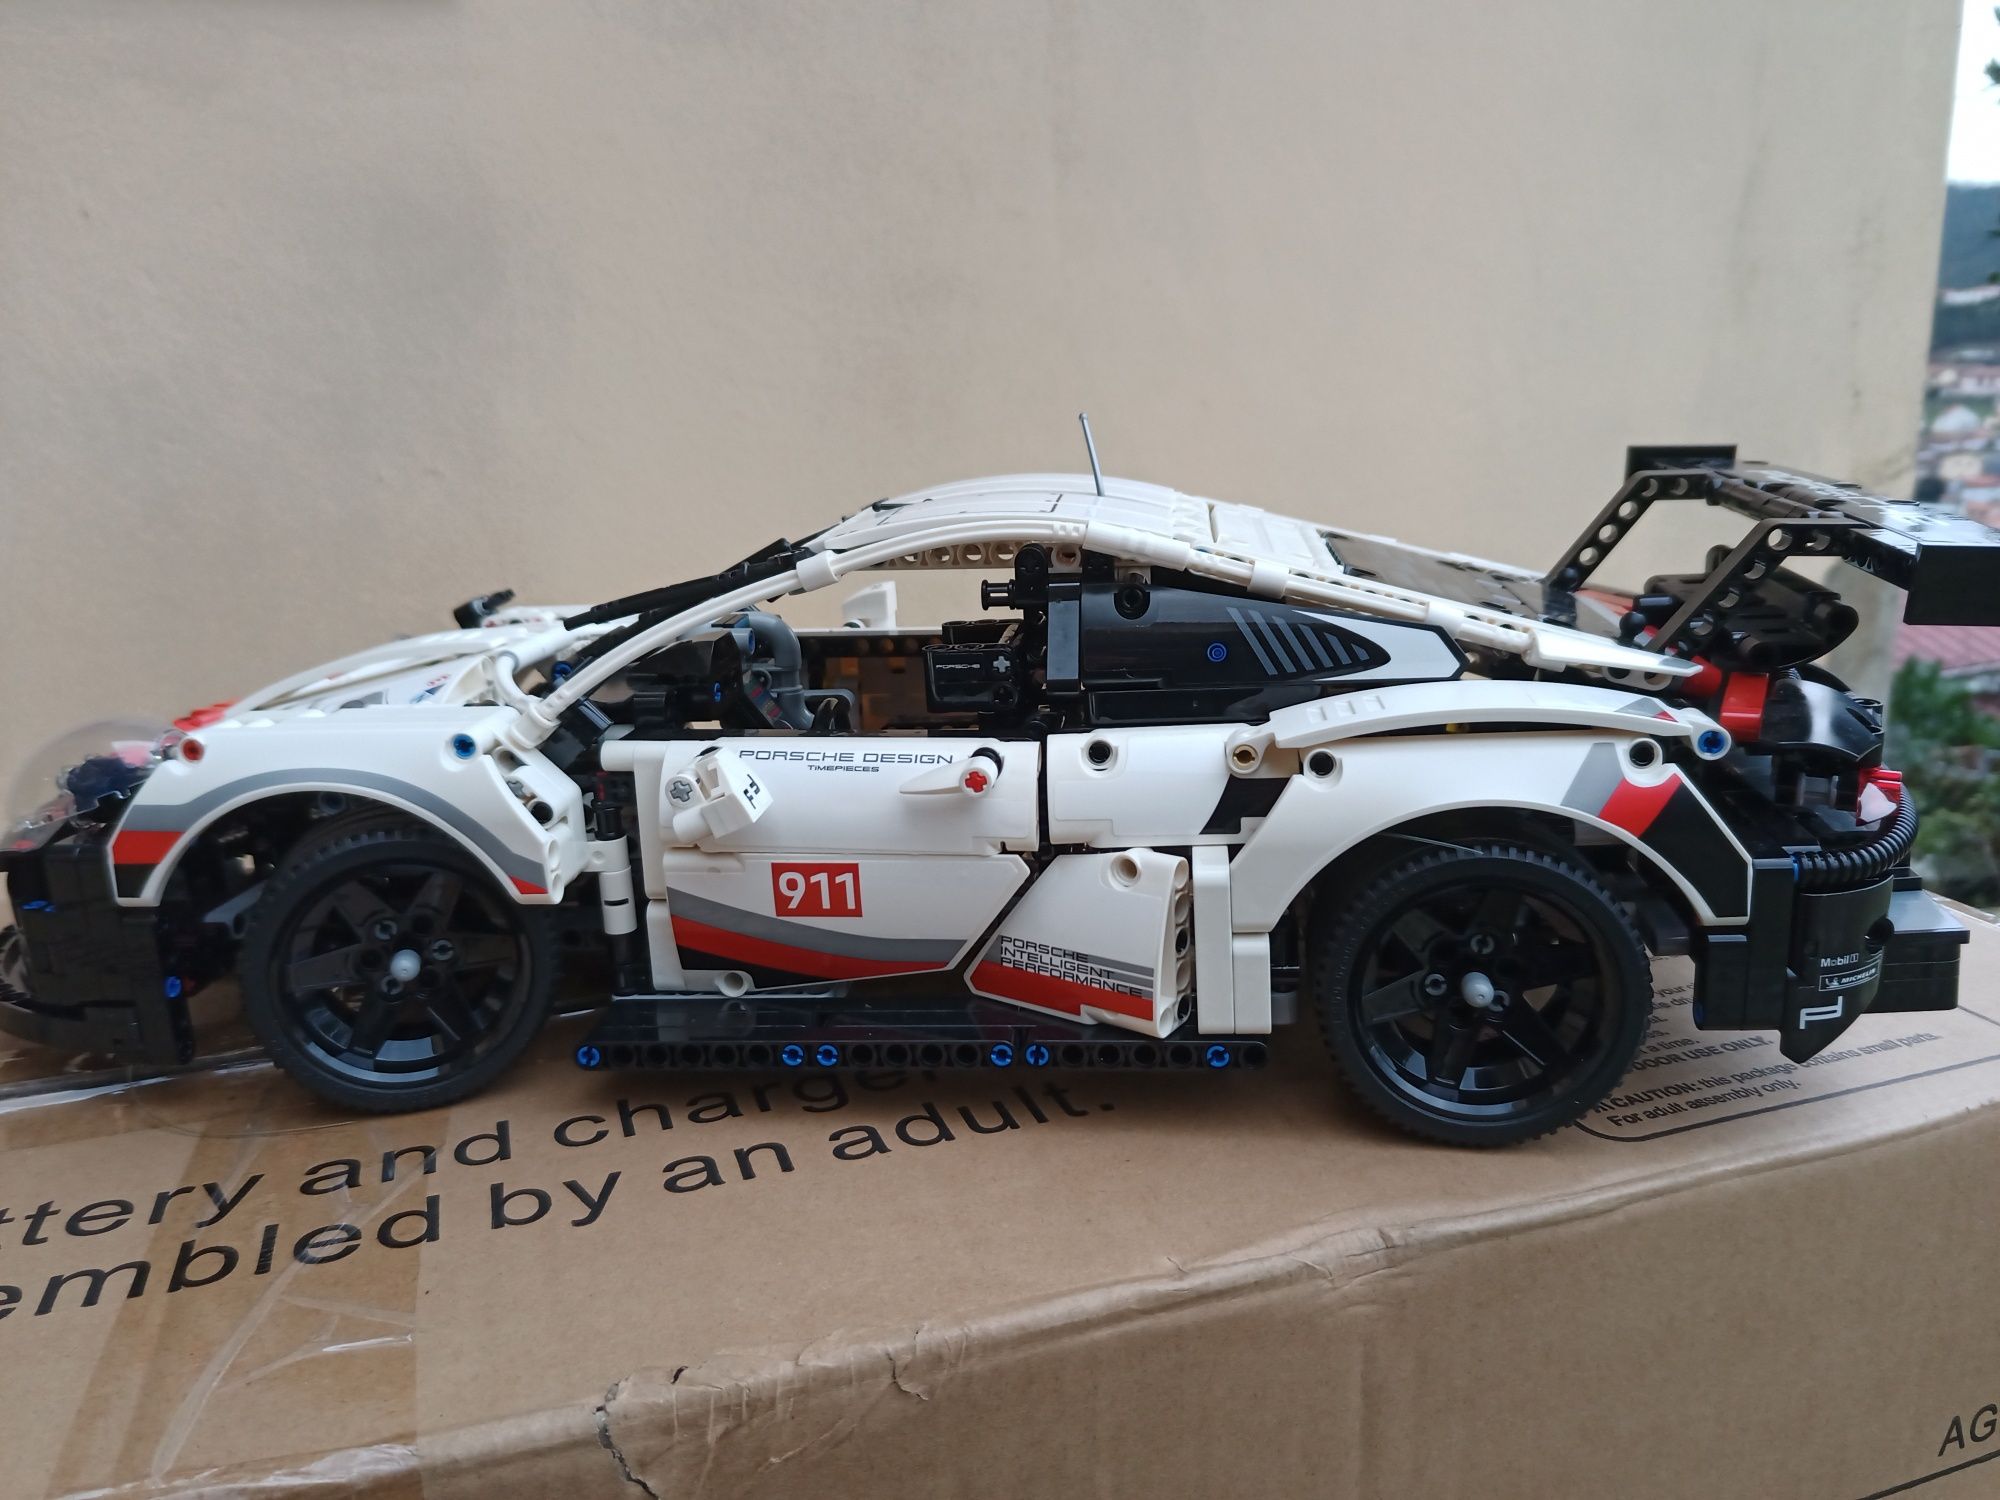 LEGO Porsche 911 RSR 
Porsche 911 RSR
Porsche 911 RSRPorsche 911 RSR